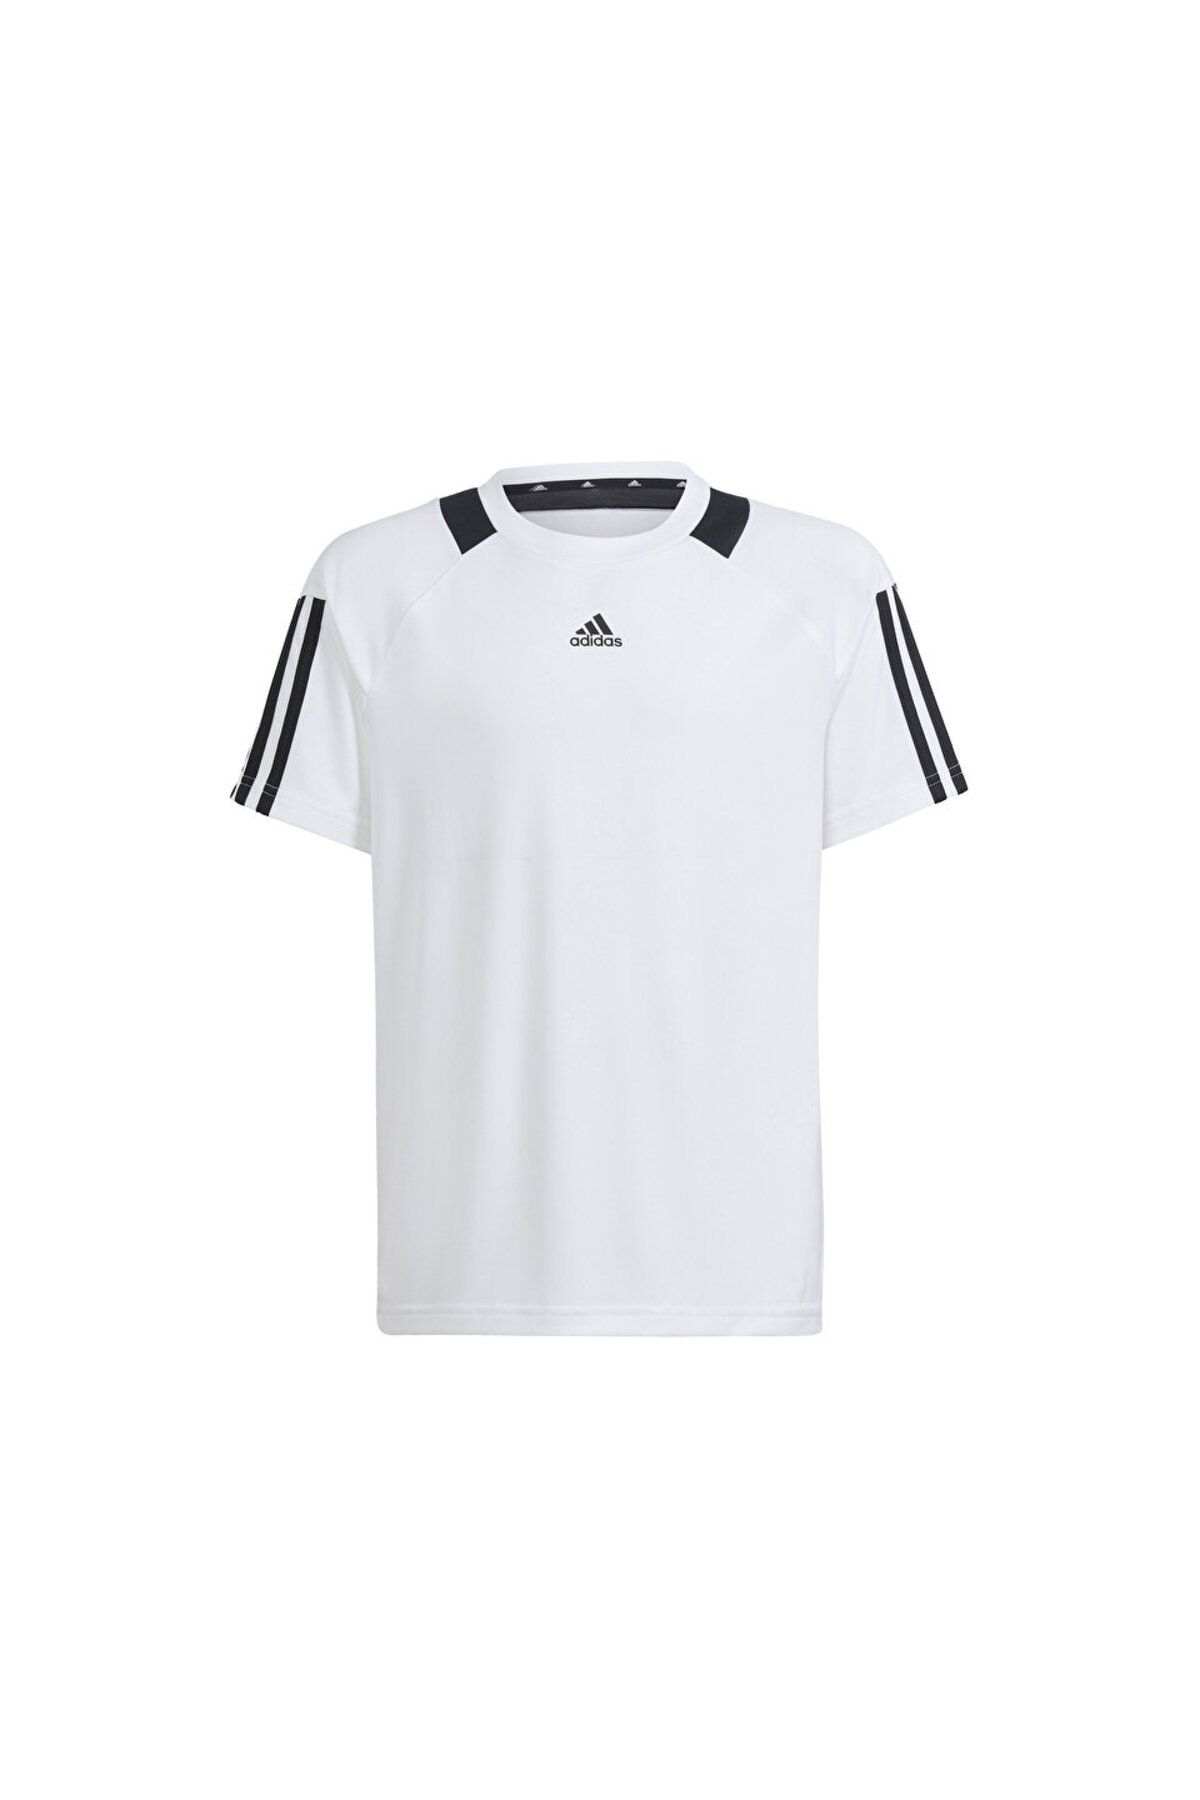 adidas J Sere T Erkek Antrenman Tişörtü IS0333 Beyaz